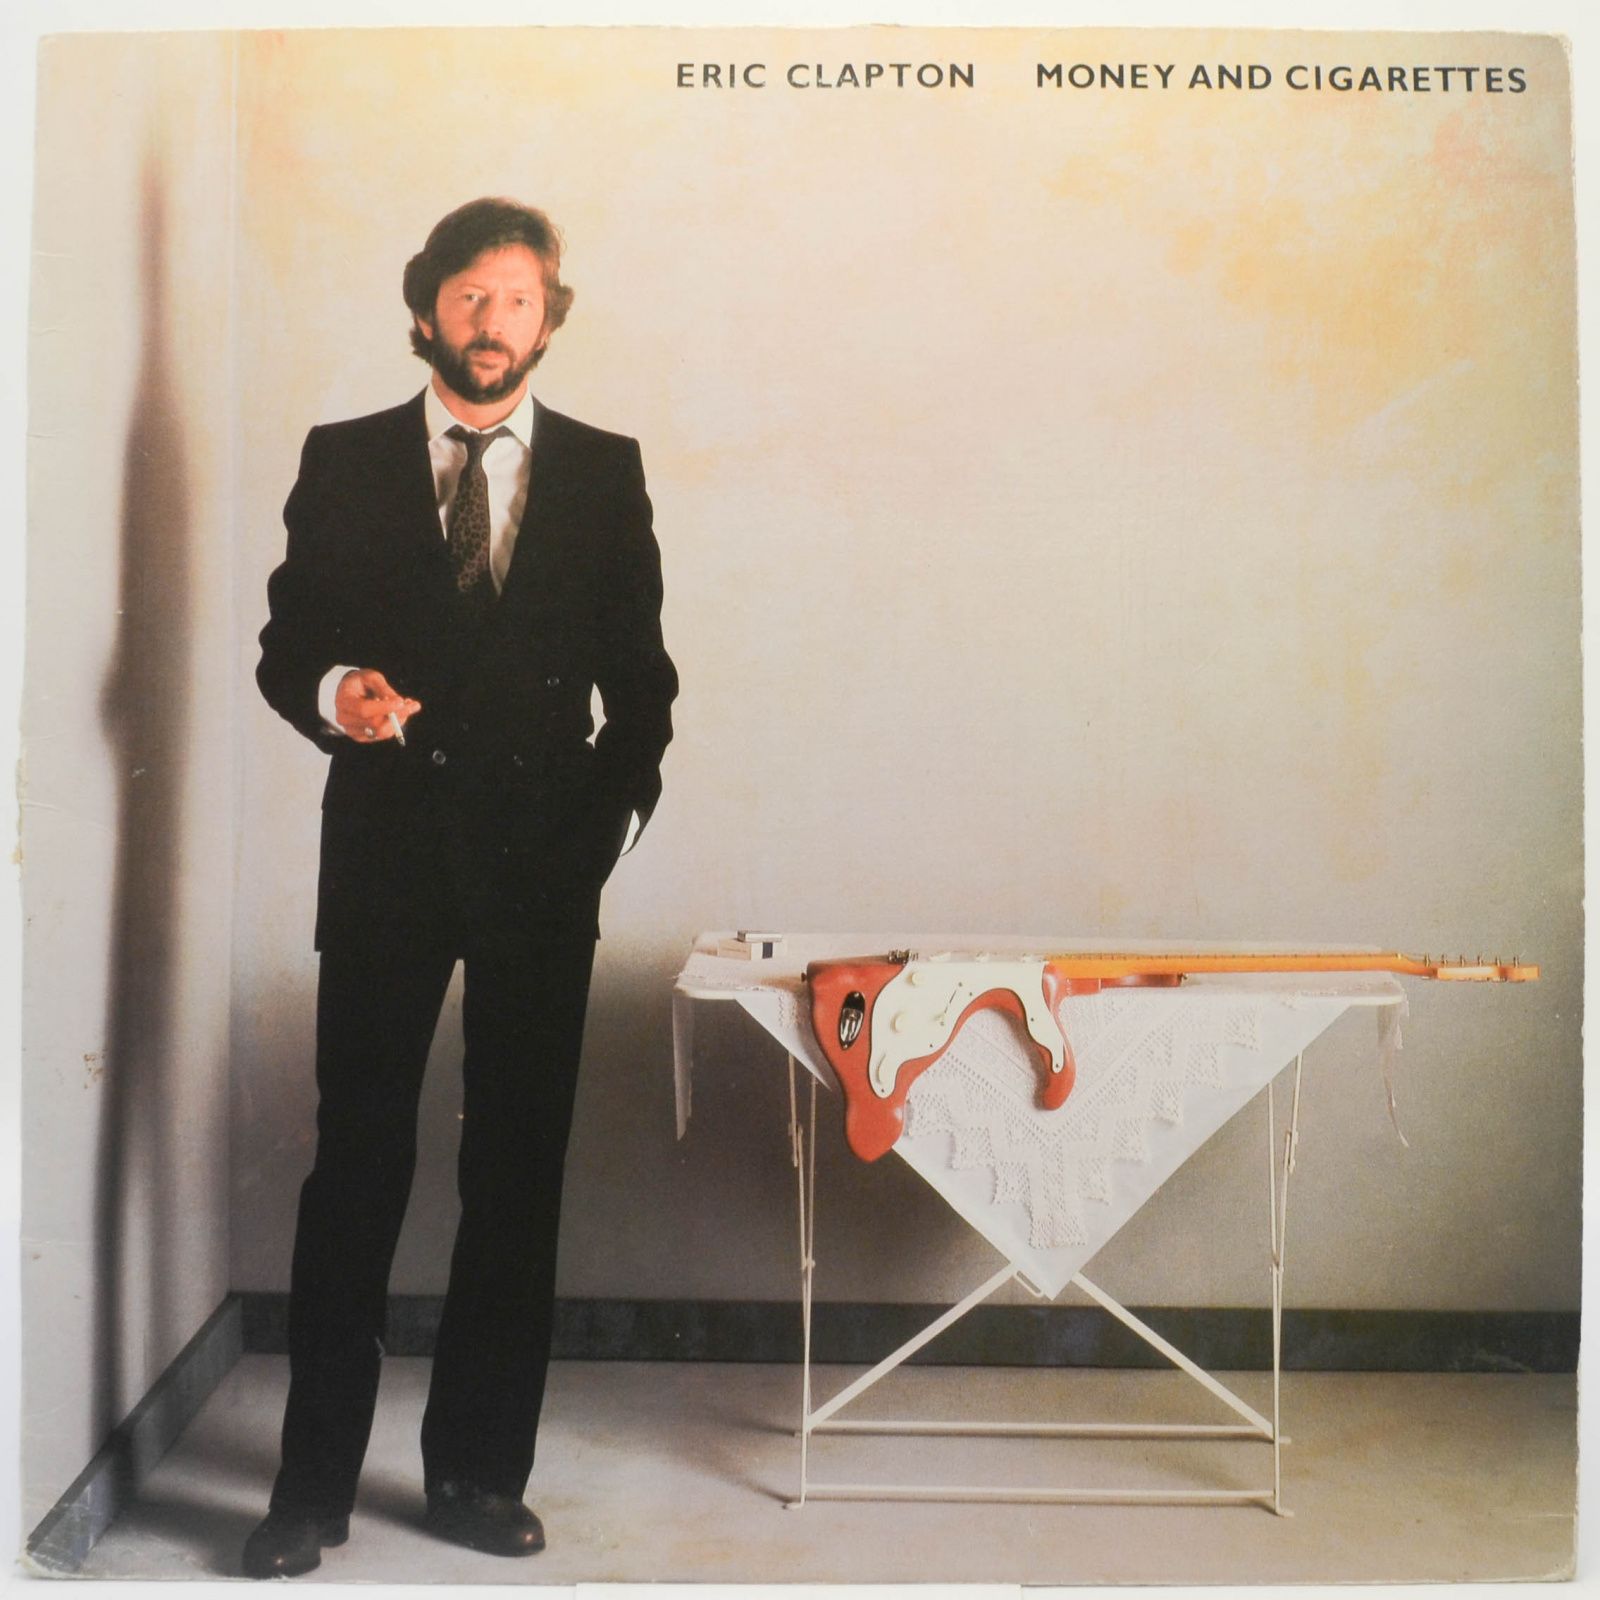 Eric Clapton — Money And Cigarettes, 1983